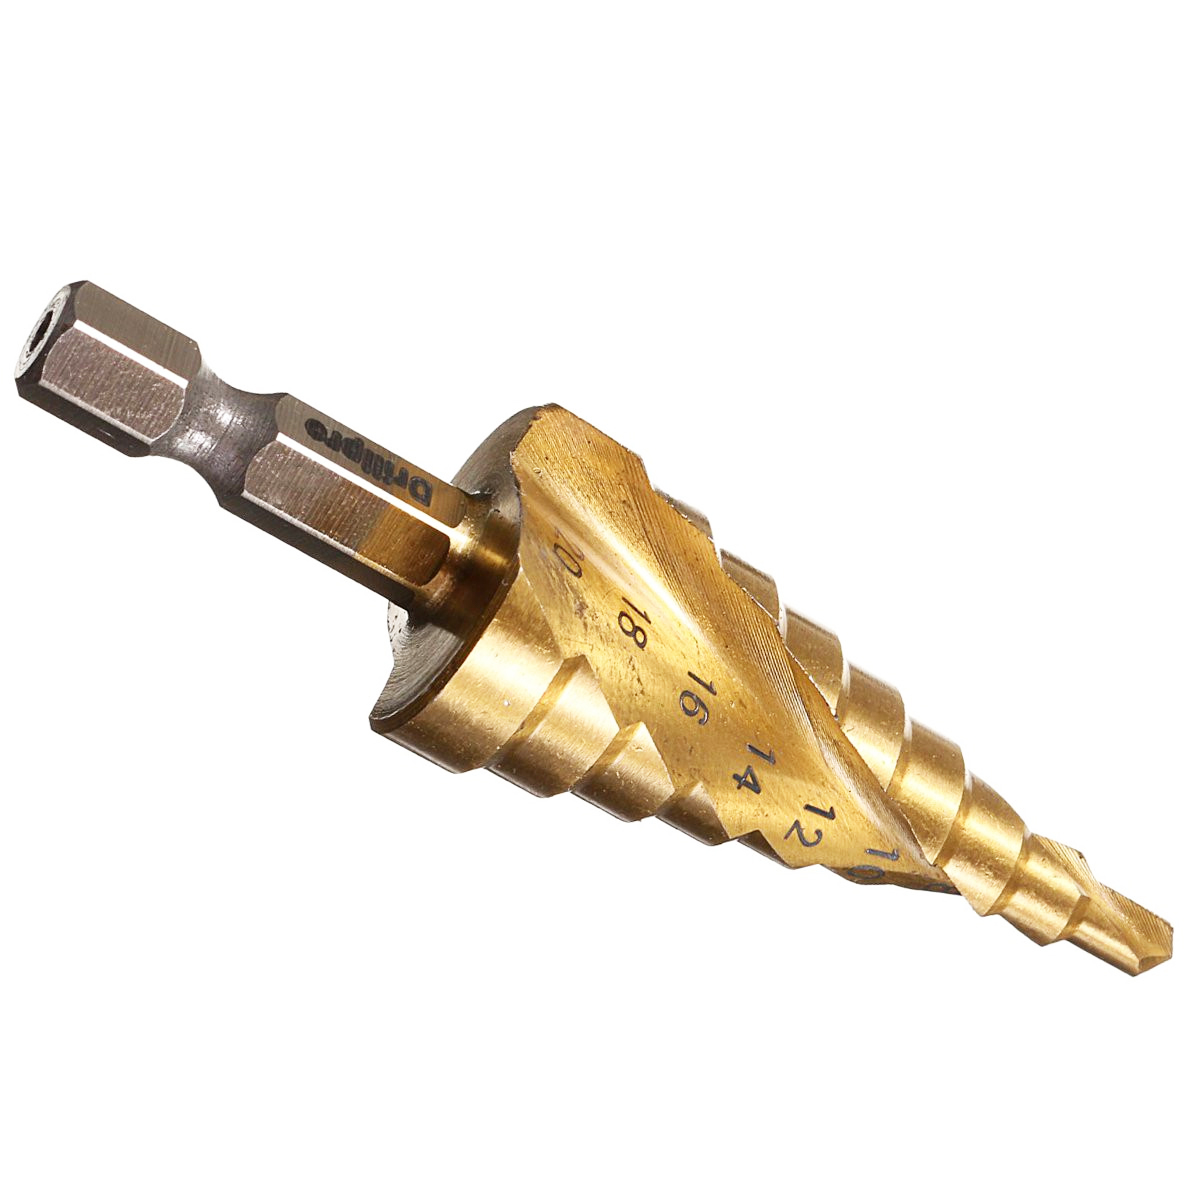 Drillpro 3pcs HSS Spiral grooved Step Drill Bits Cut Tool Set 4mm to 12mm/20mm/32mm